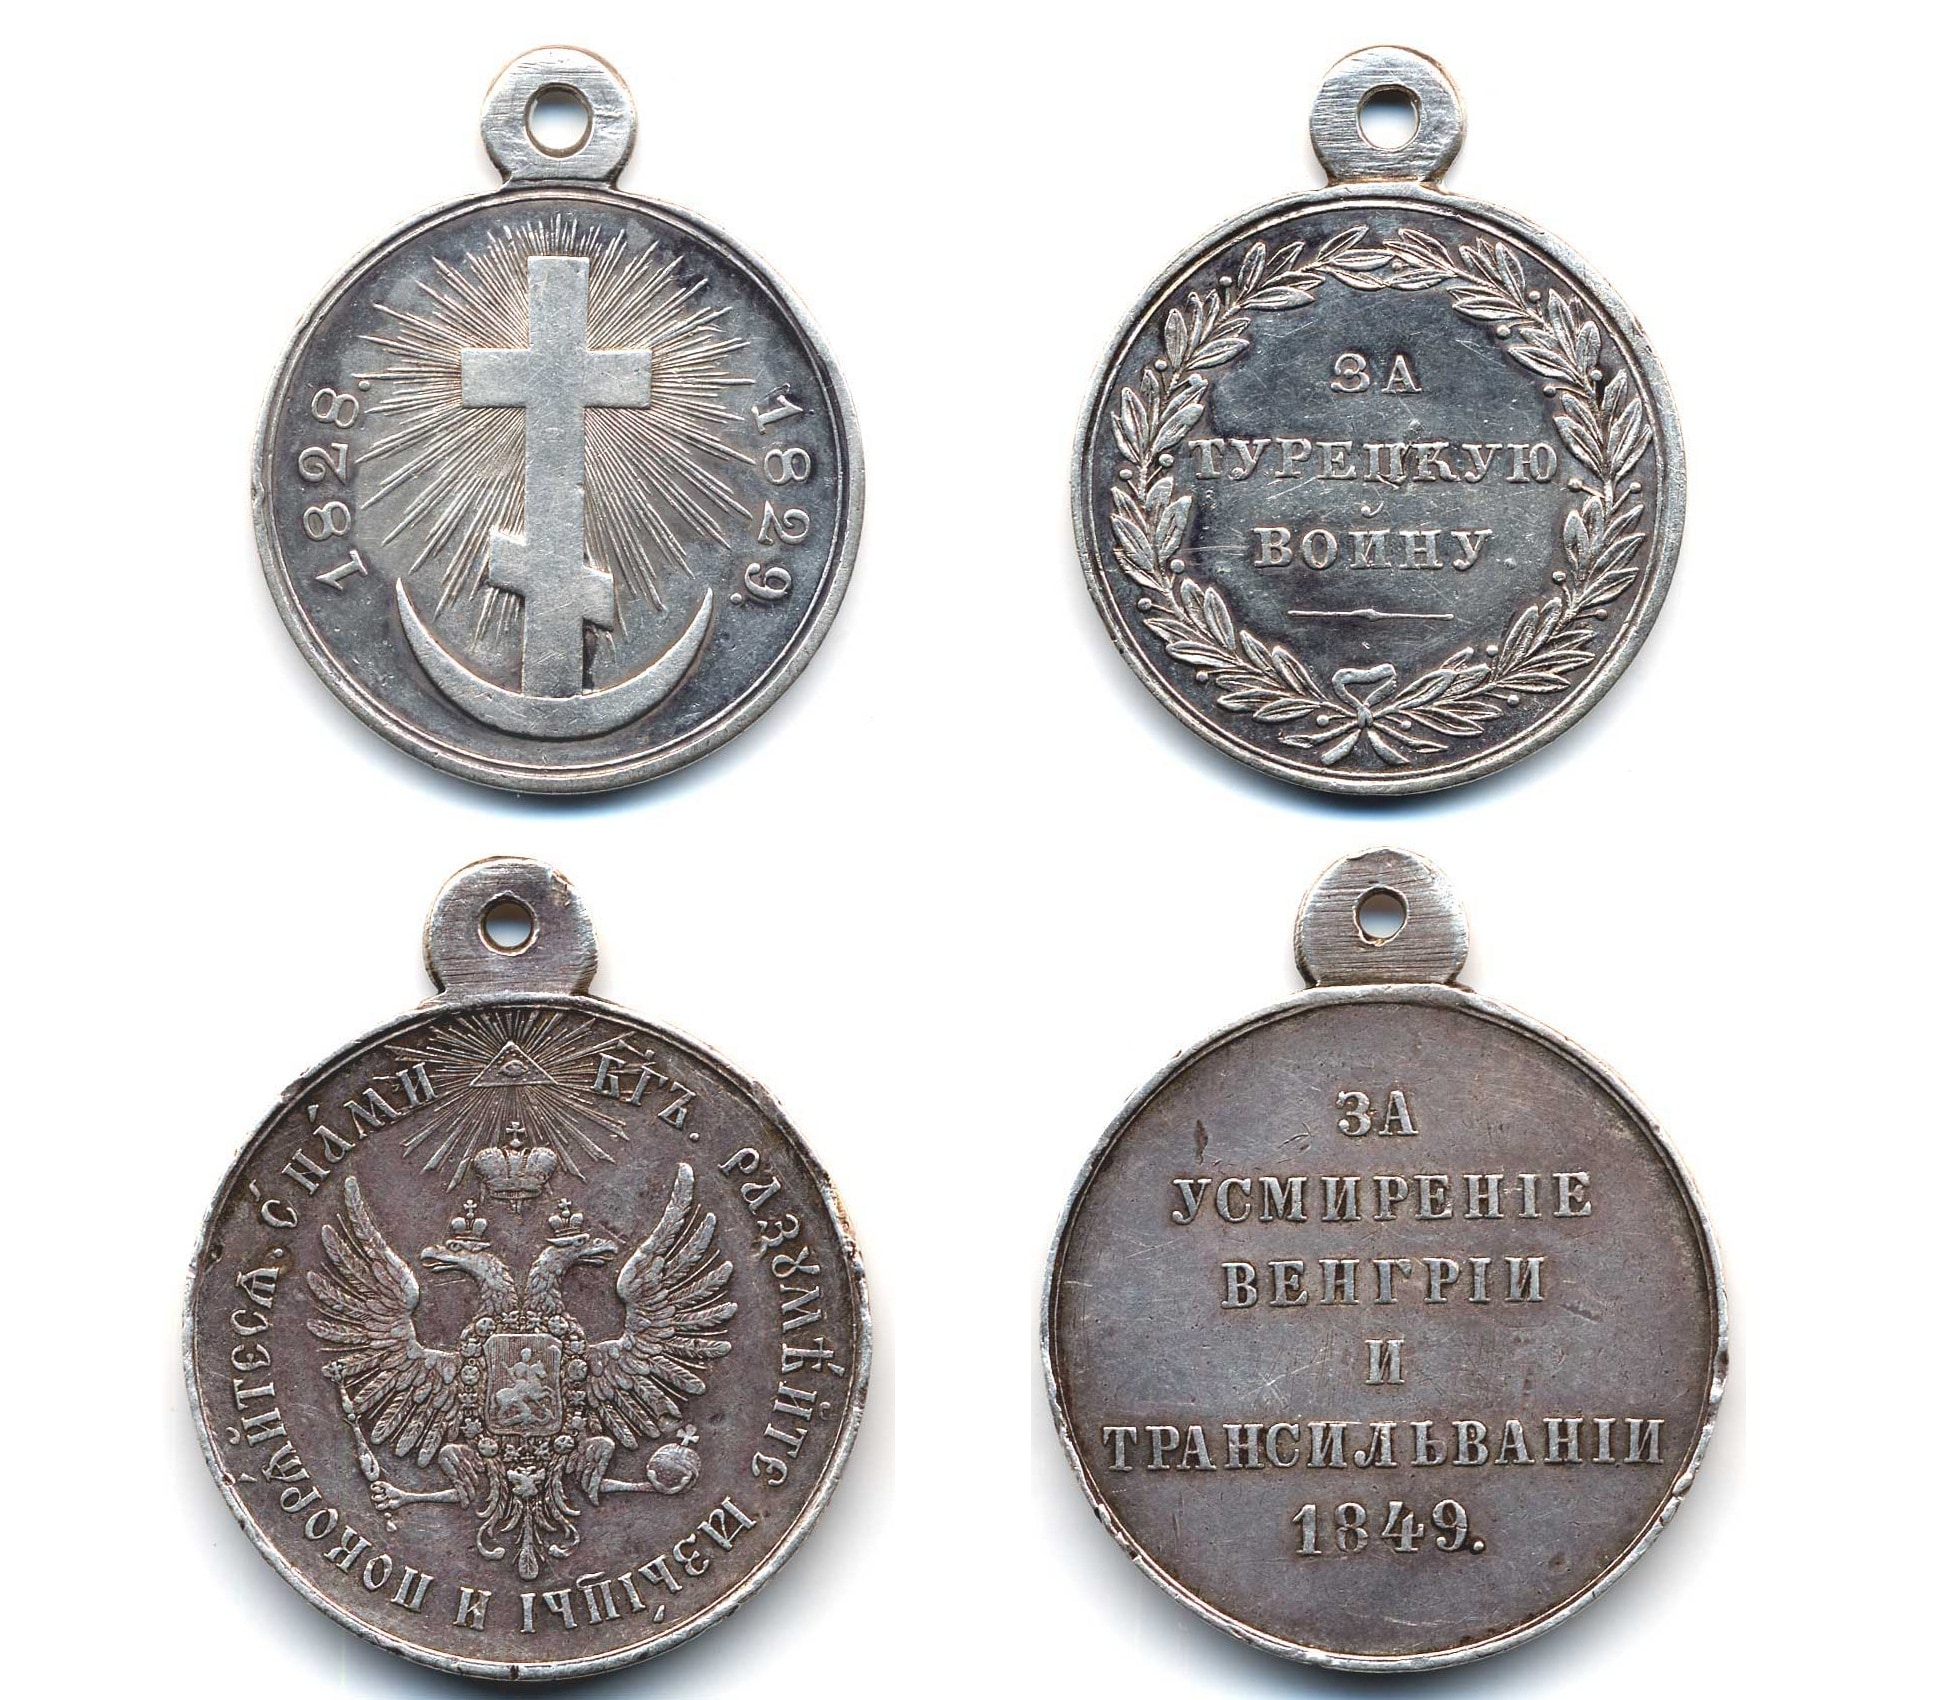 4 silver round pendants